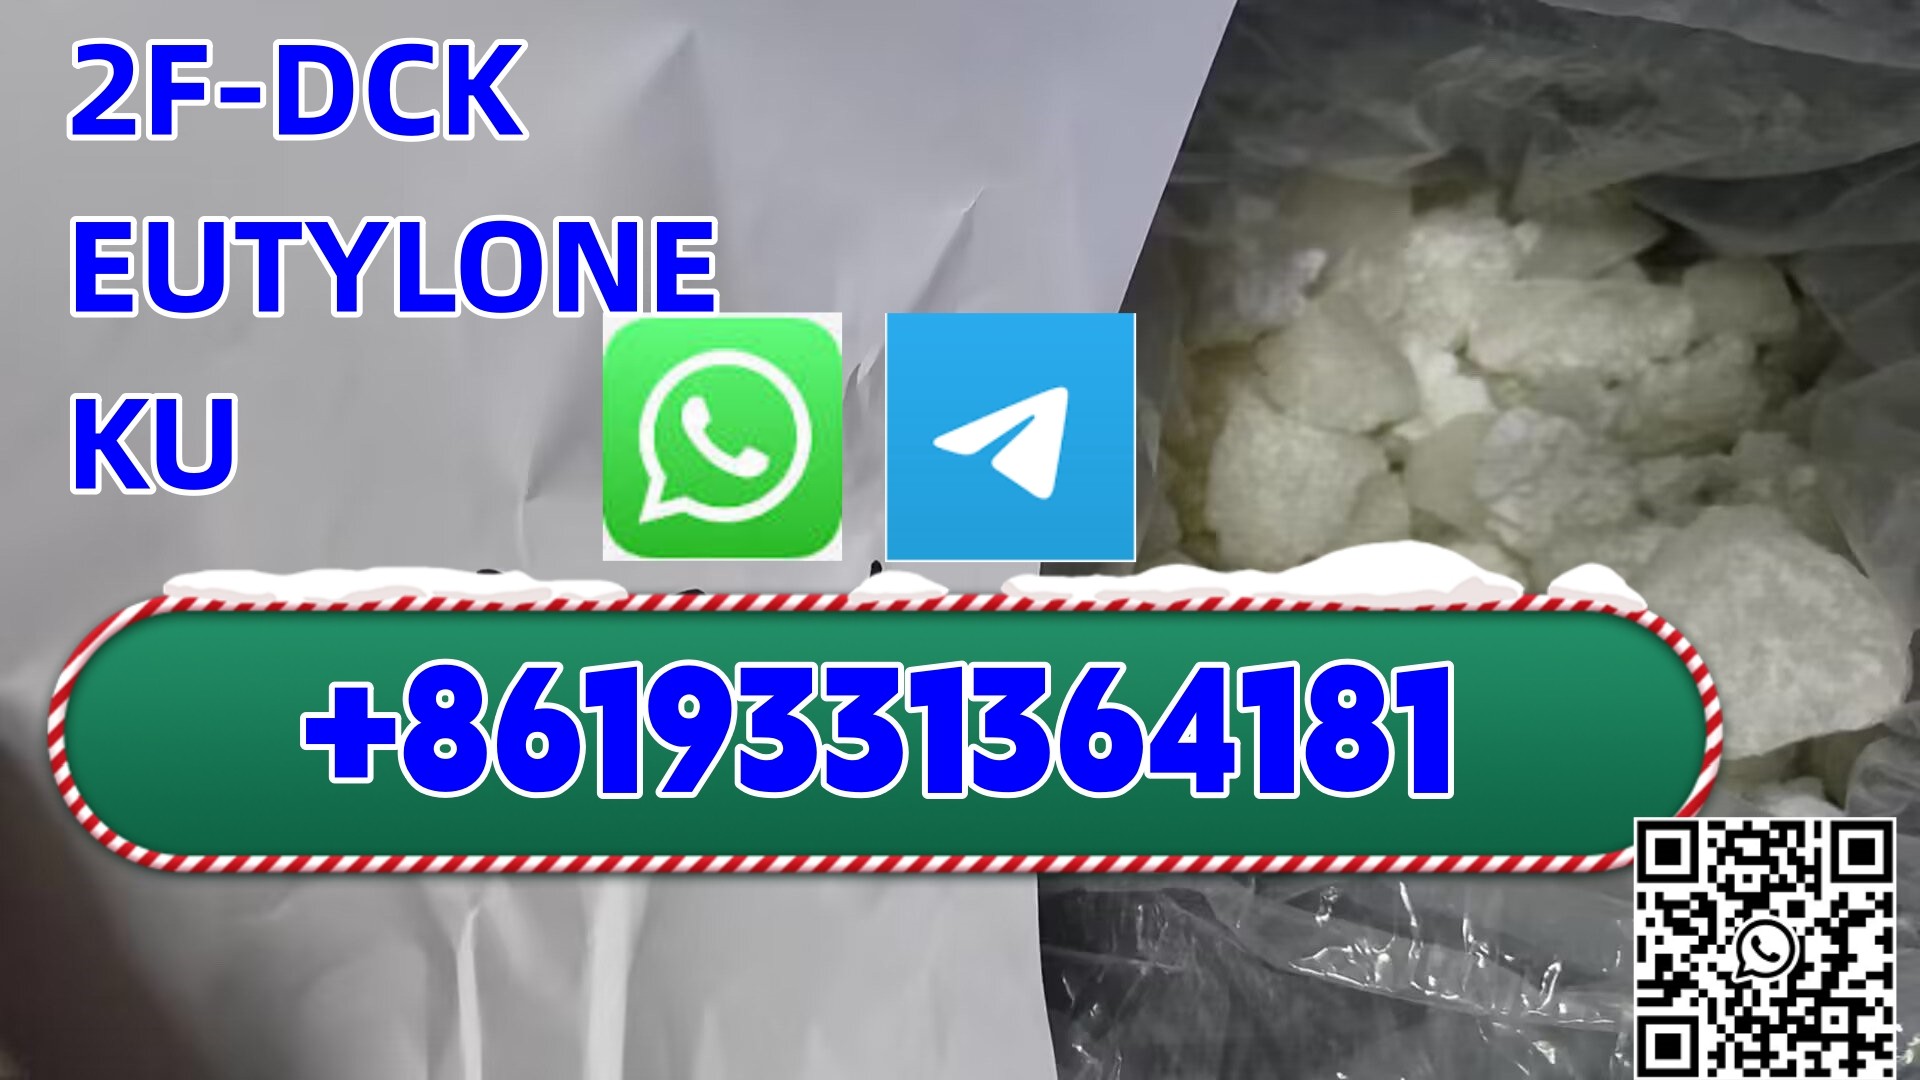 2F-DCK supplier 2fdck 2F EU eutylone KU Ku eu White crystal in stock